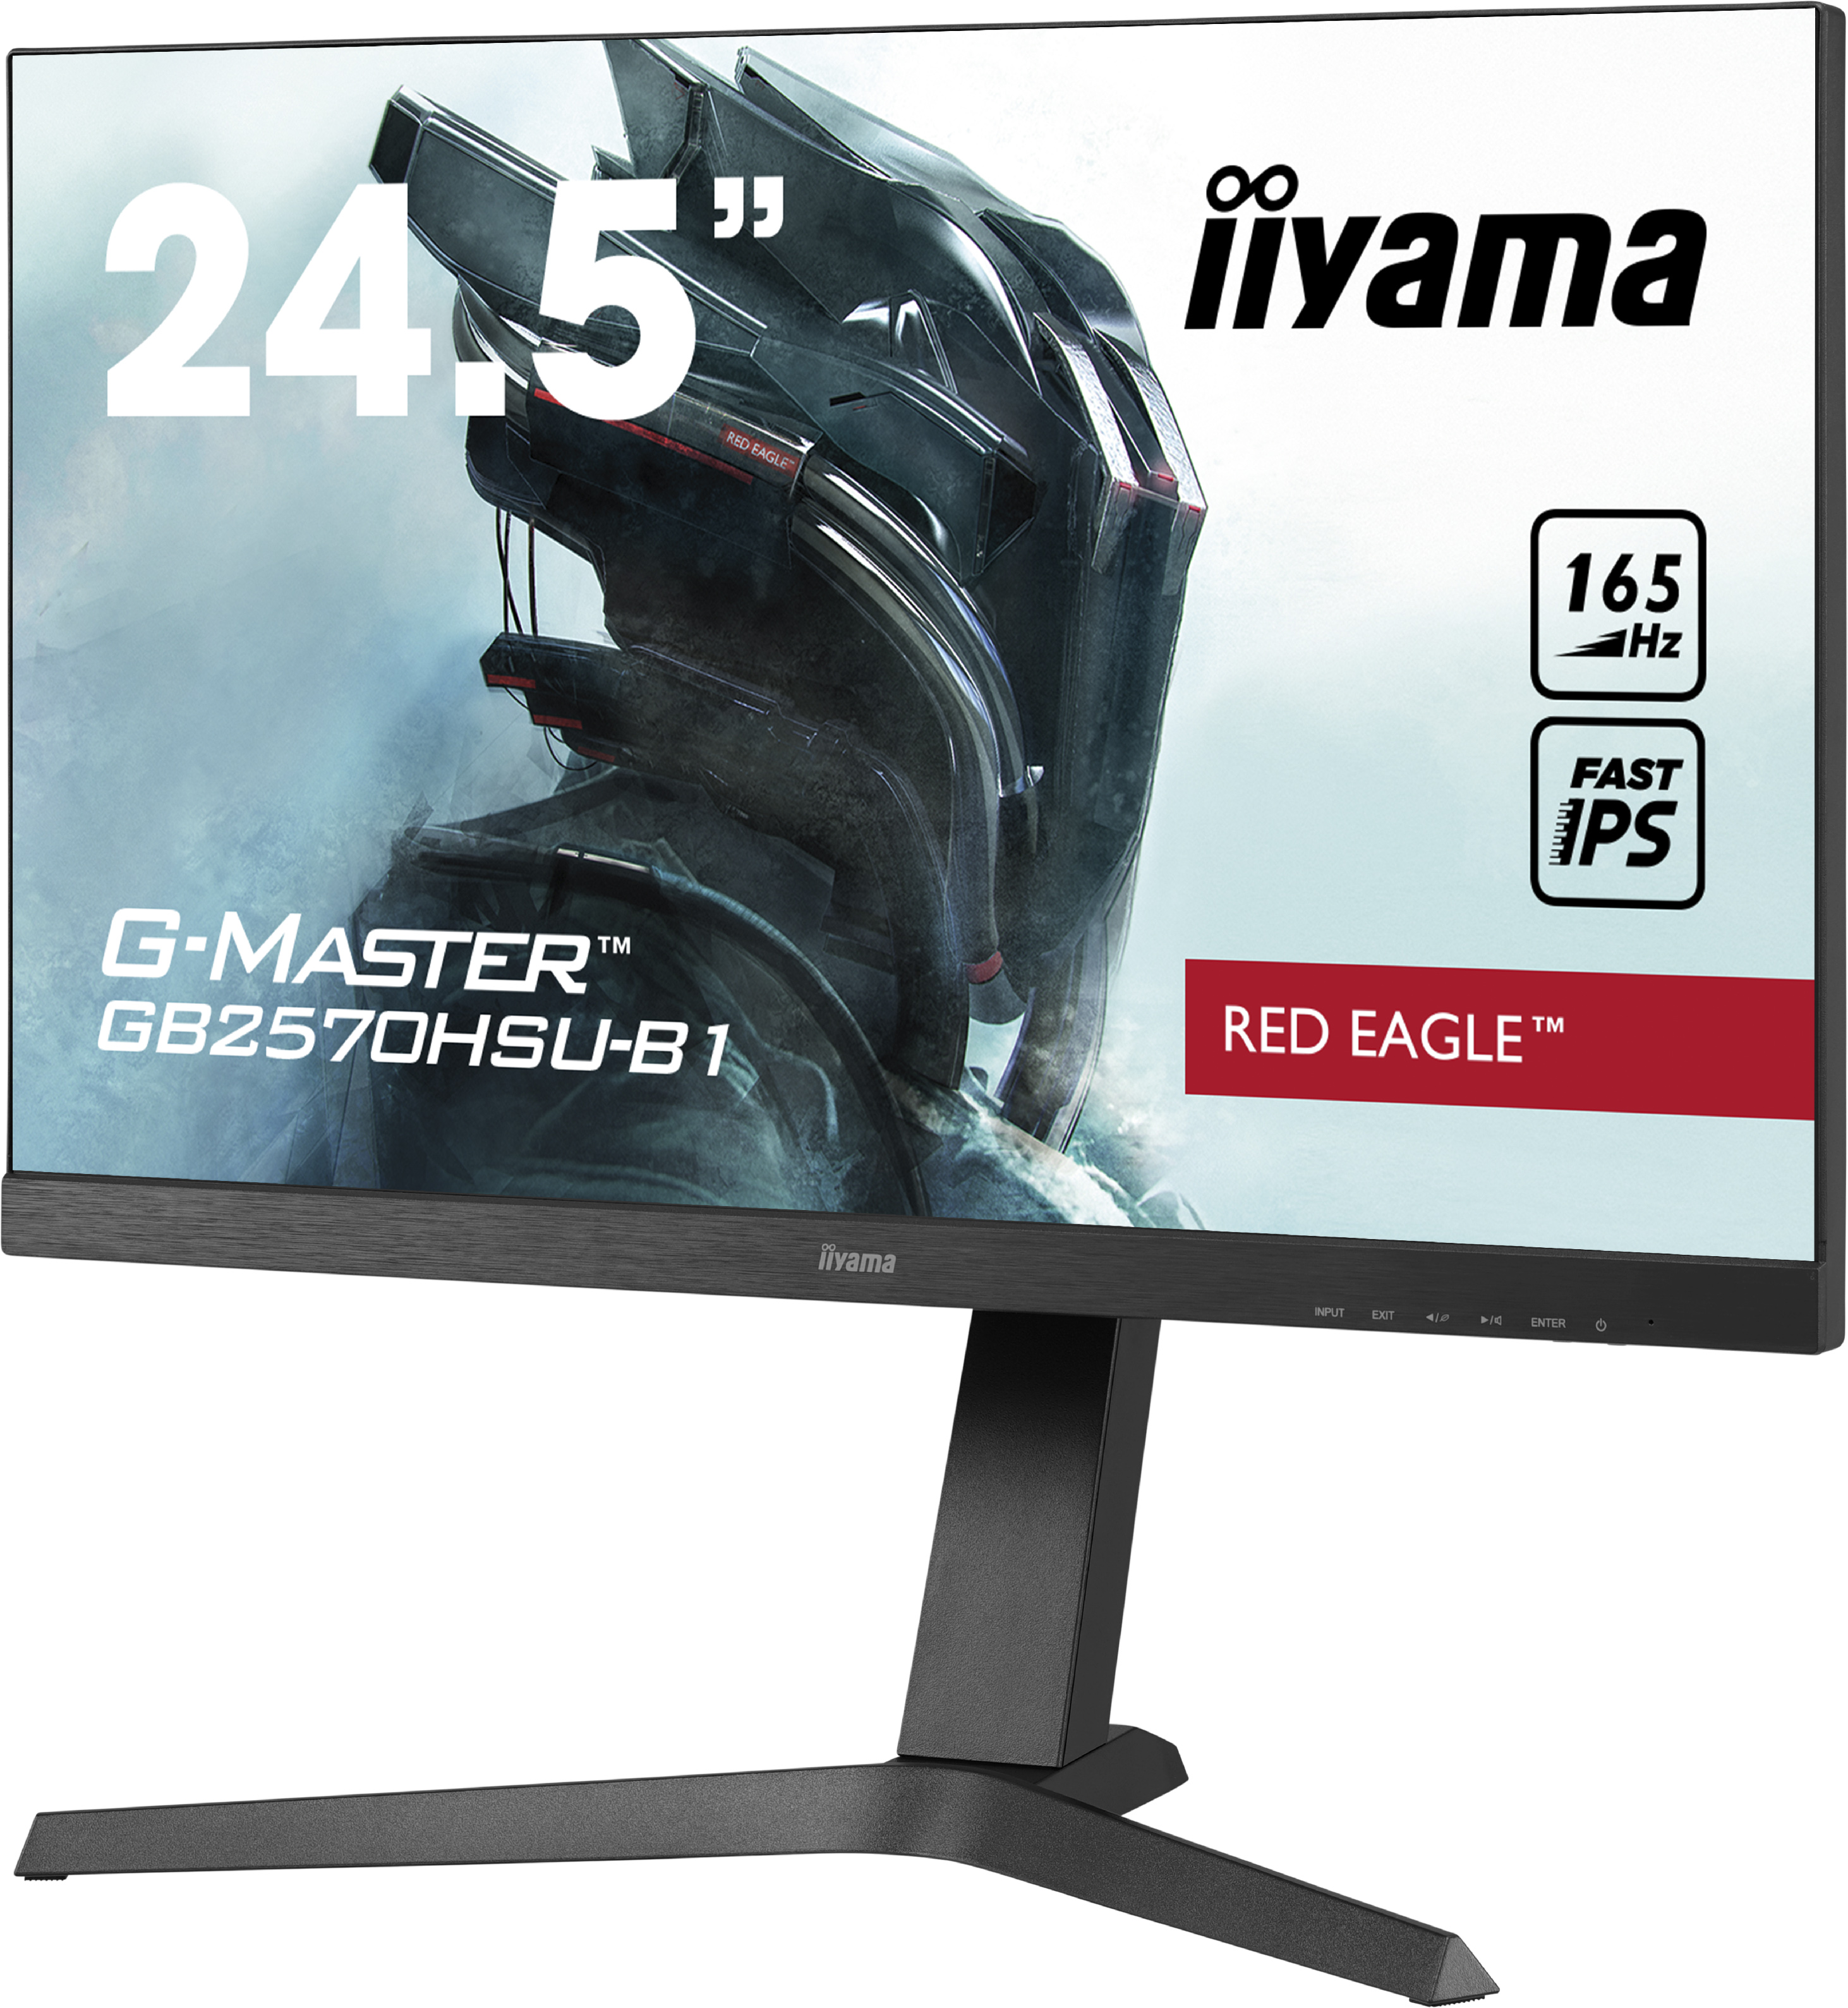 Iiyama G-MASTER GB2570HSU-B1 RED EAGLE | 24,5" | 165Hz | Gaming Monitor